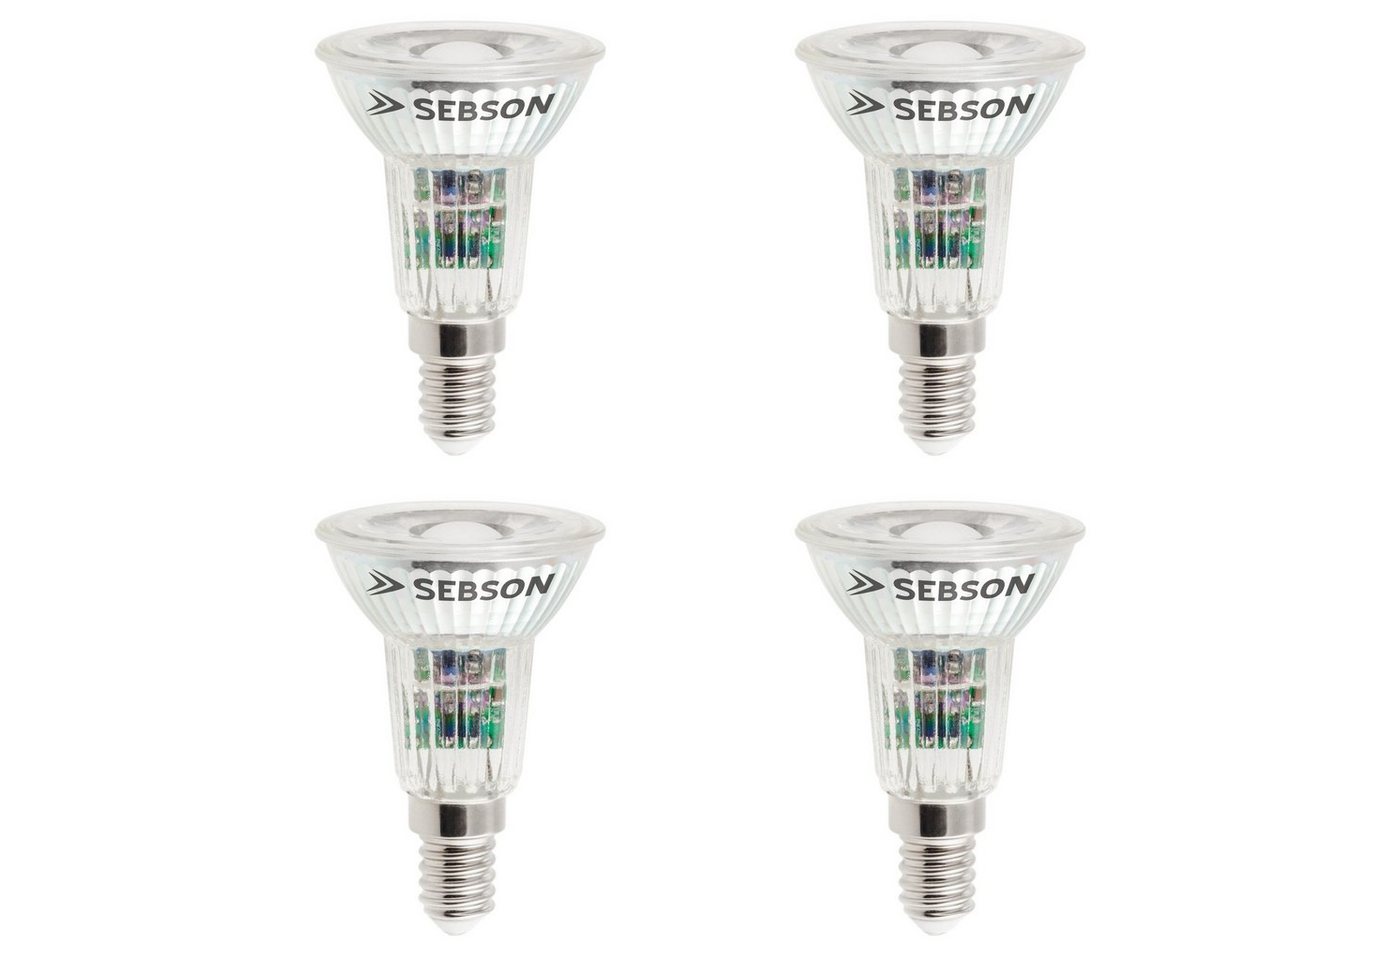 SEBSON LED-Leuchtmittel LED Lampe E14 5W warmweiß 420lm Spot 46° 230V - 4er Pack von SEBSON